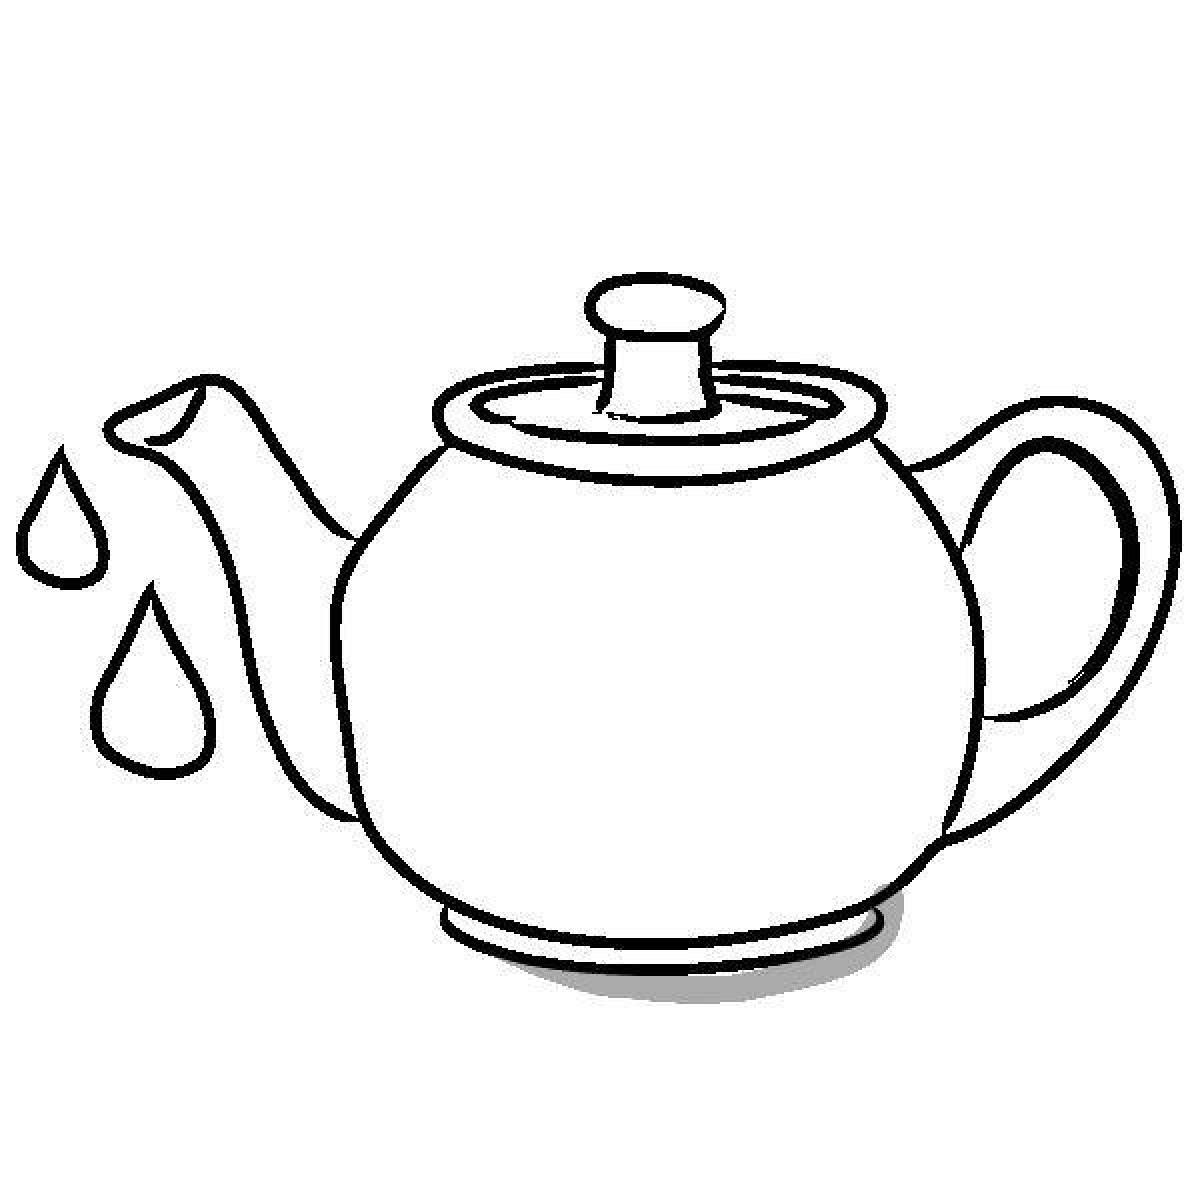 Delightful teapot coloring book